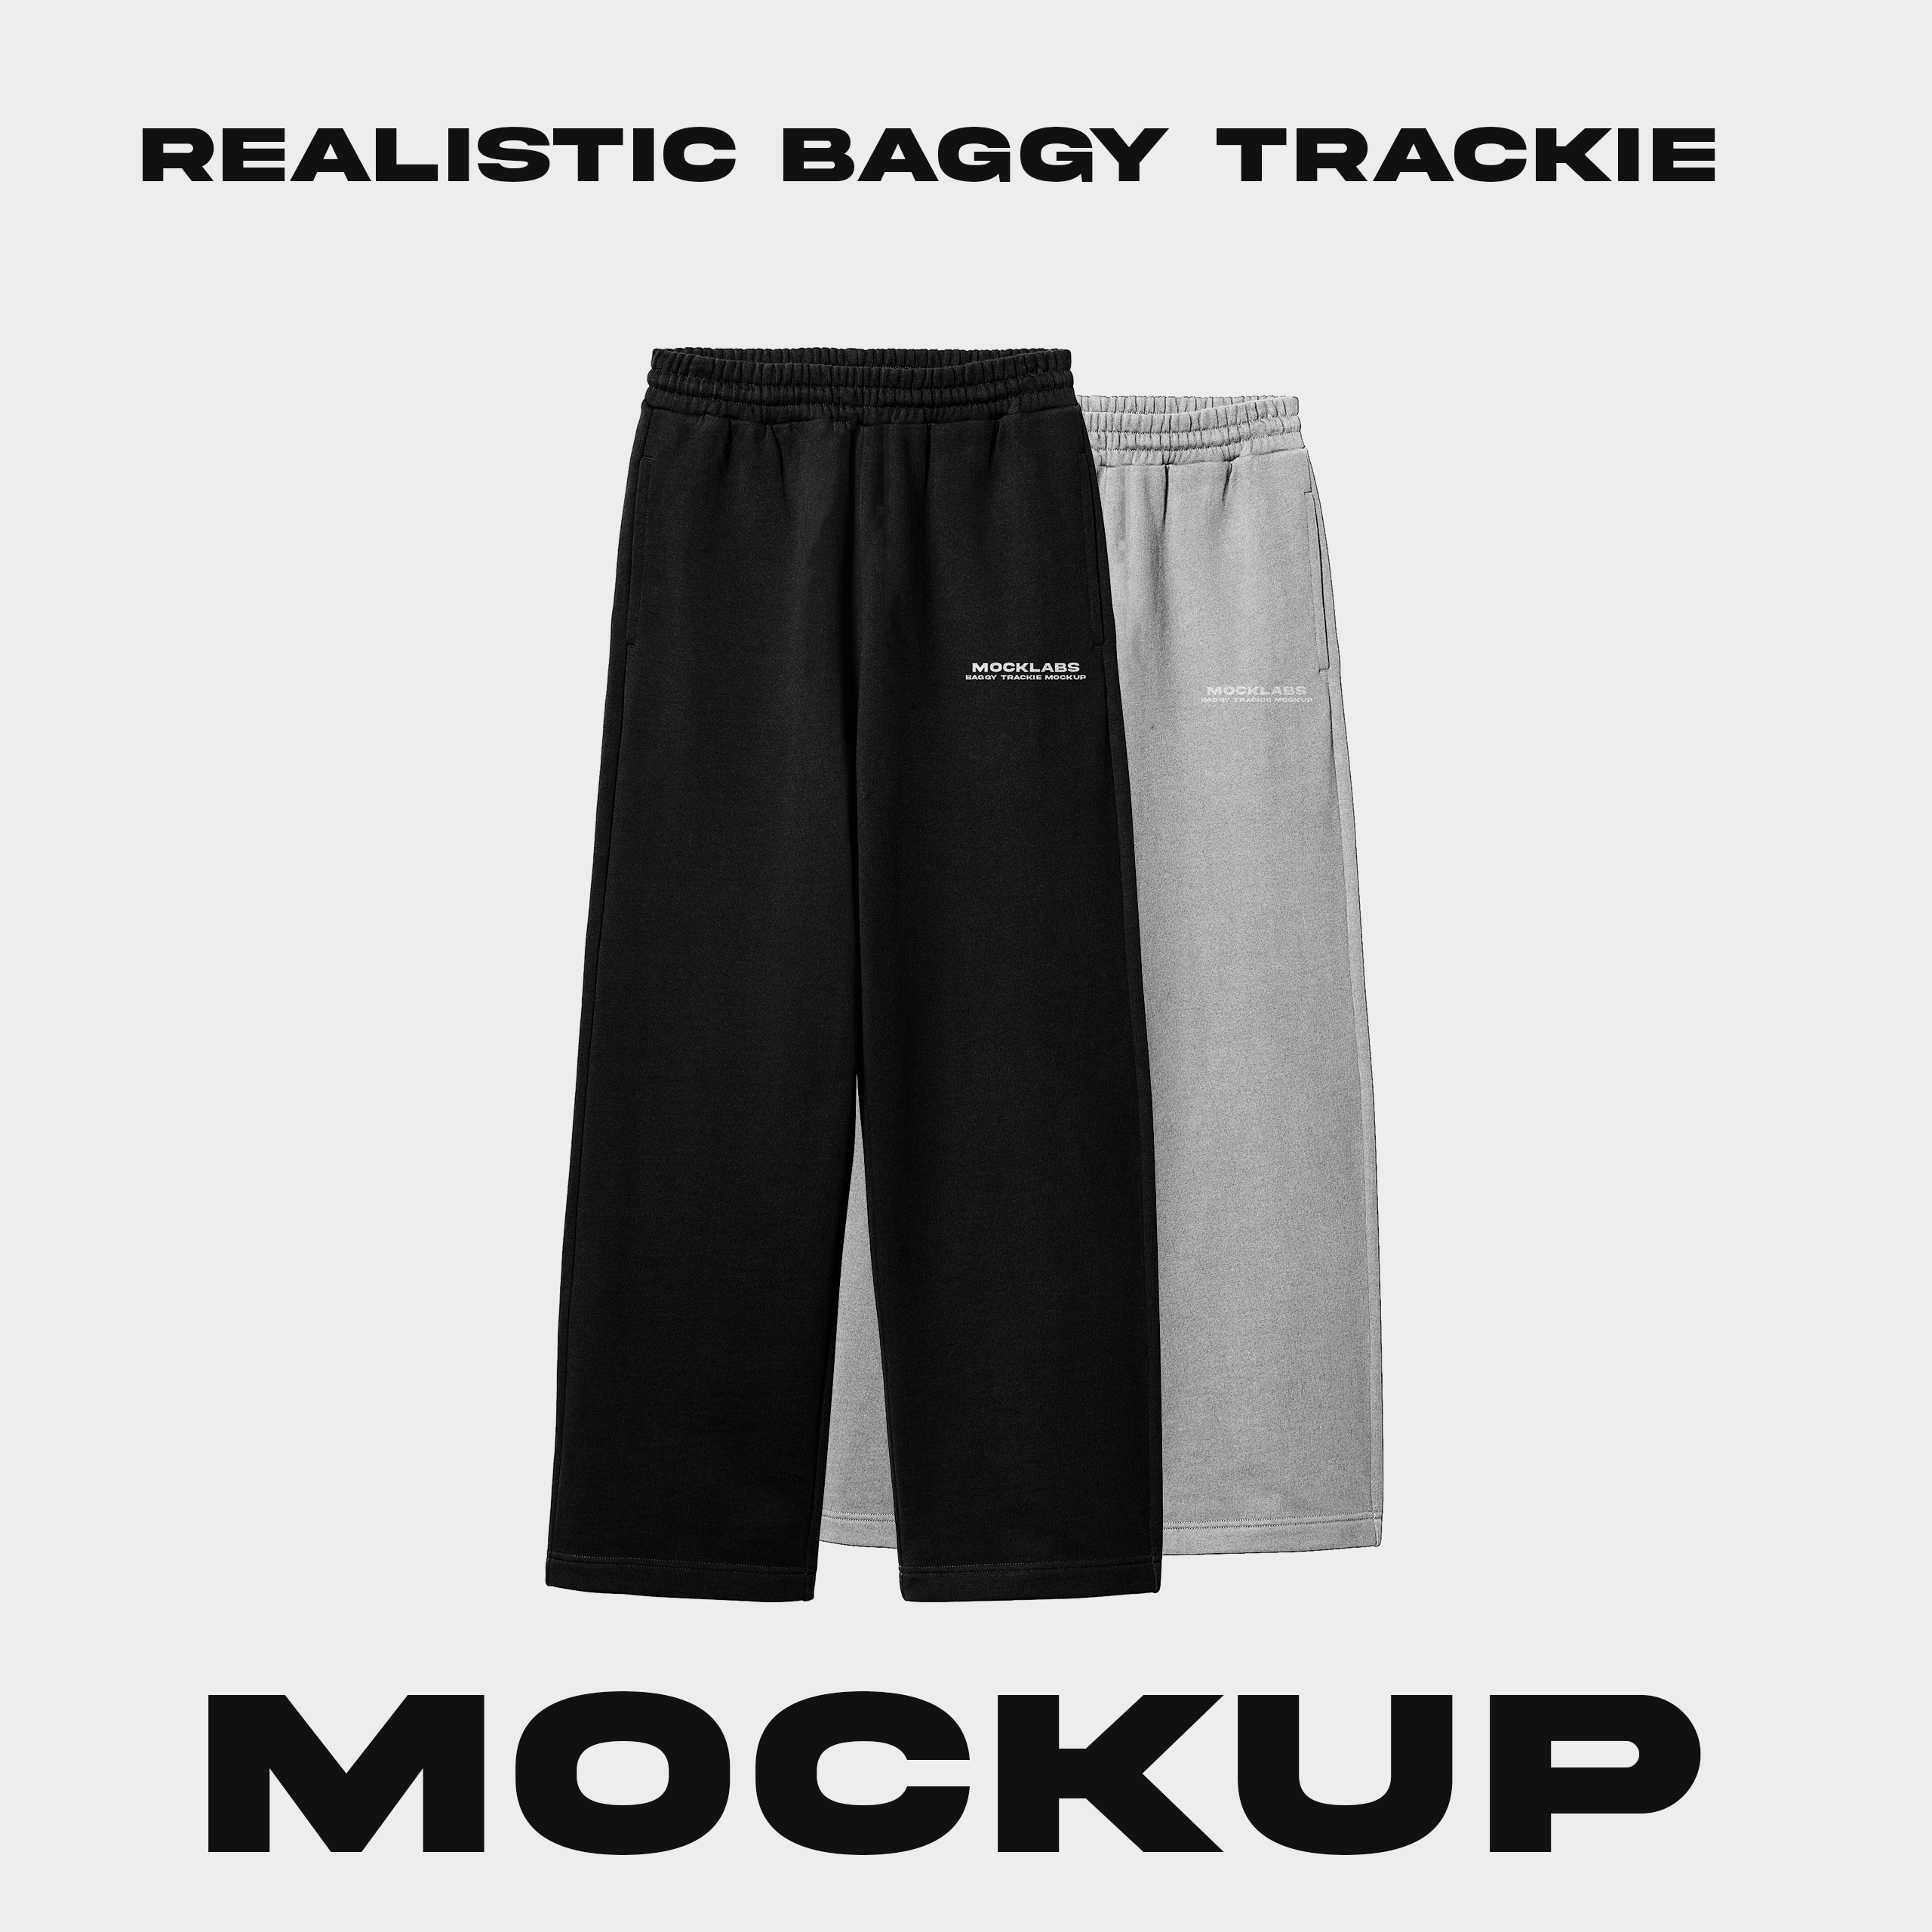 PHOTOREALISTIC Baggy Trackie Mockup [DIGITAL DOWNLOAD]